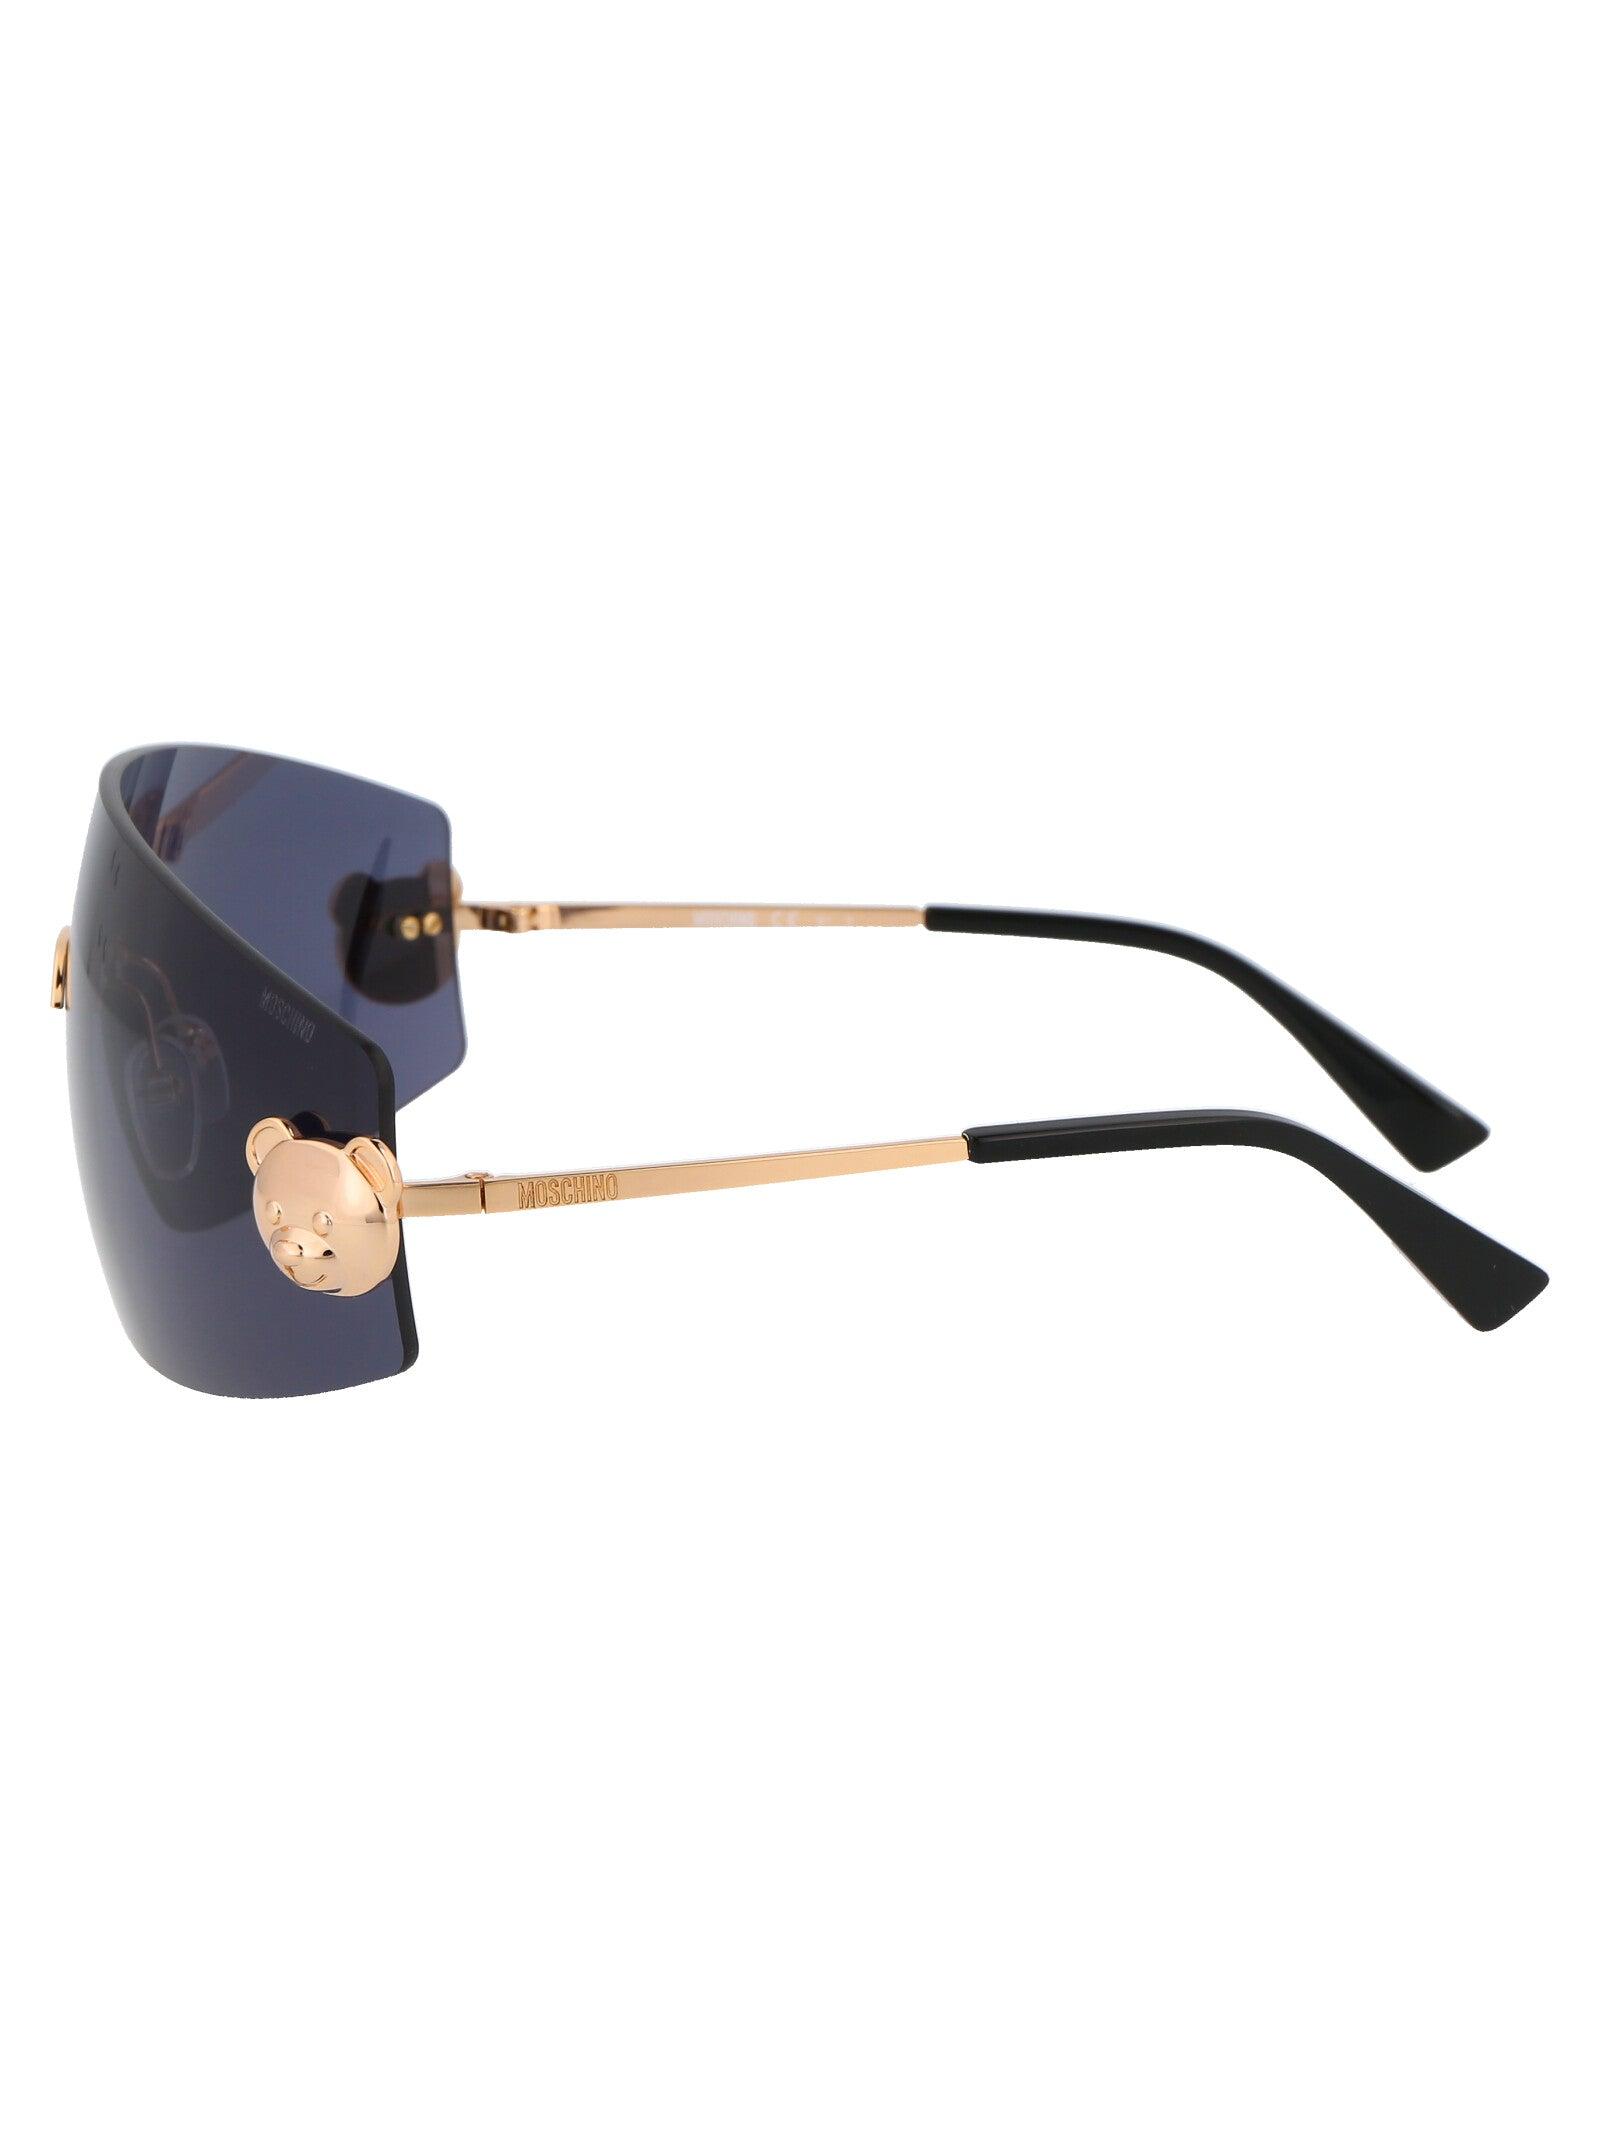 Moschino Unisex 56mm Sunglasses in Black Blue Womens Sunglasses Moschino Sunglasses - Save 2% 